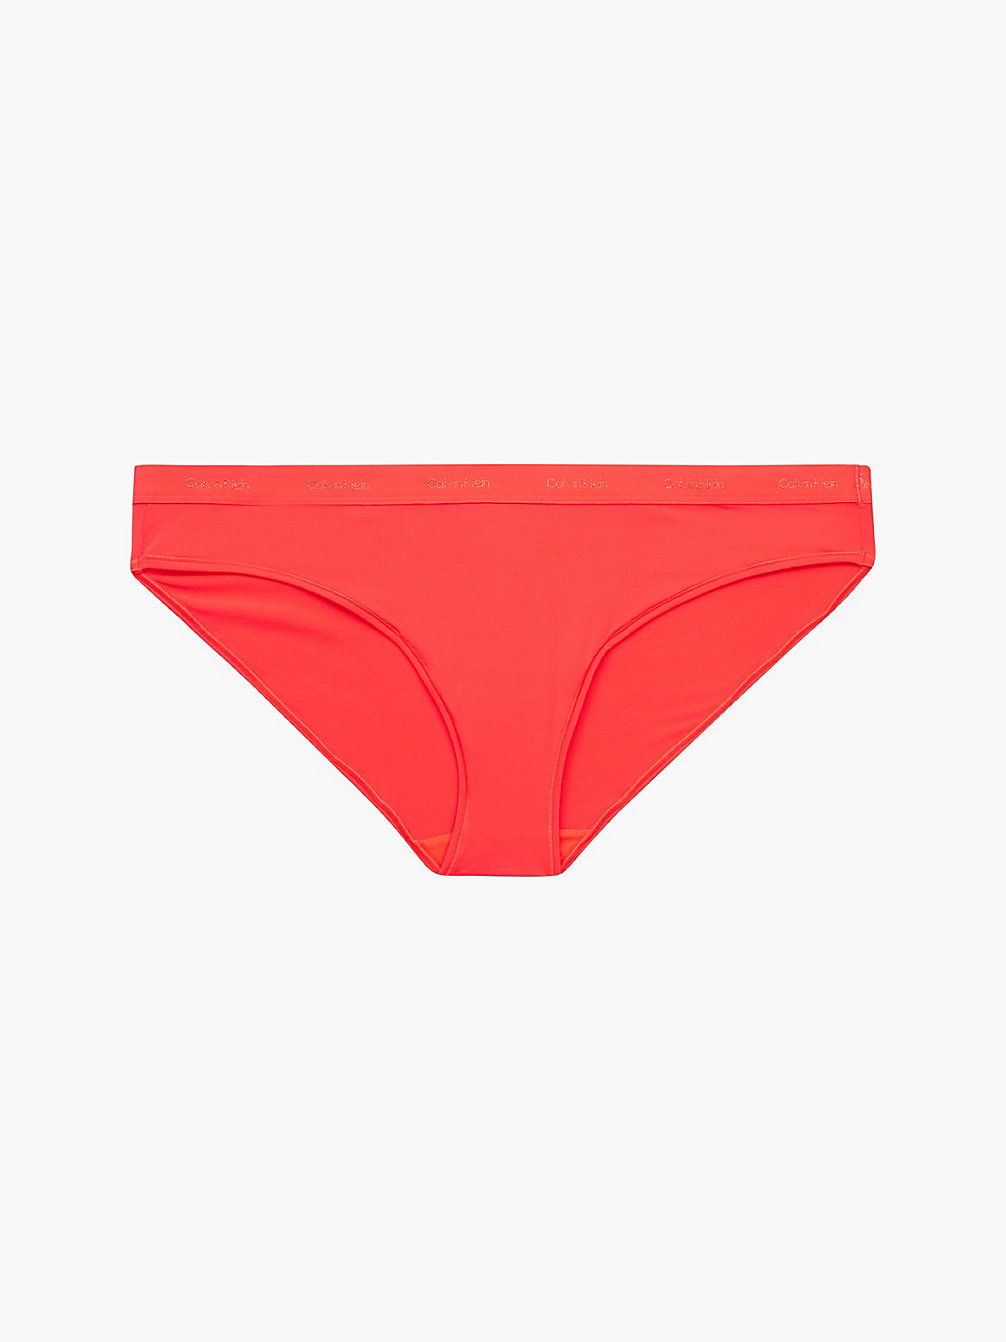 ORANGE ODYSSEY Plus Size Bikini Brief - Form To Body undefined women Calvin Klein